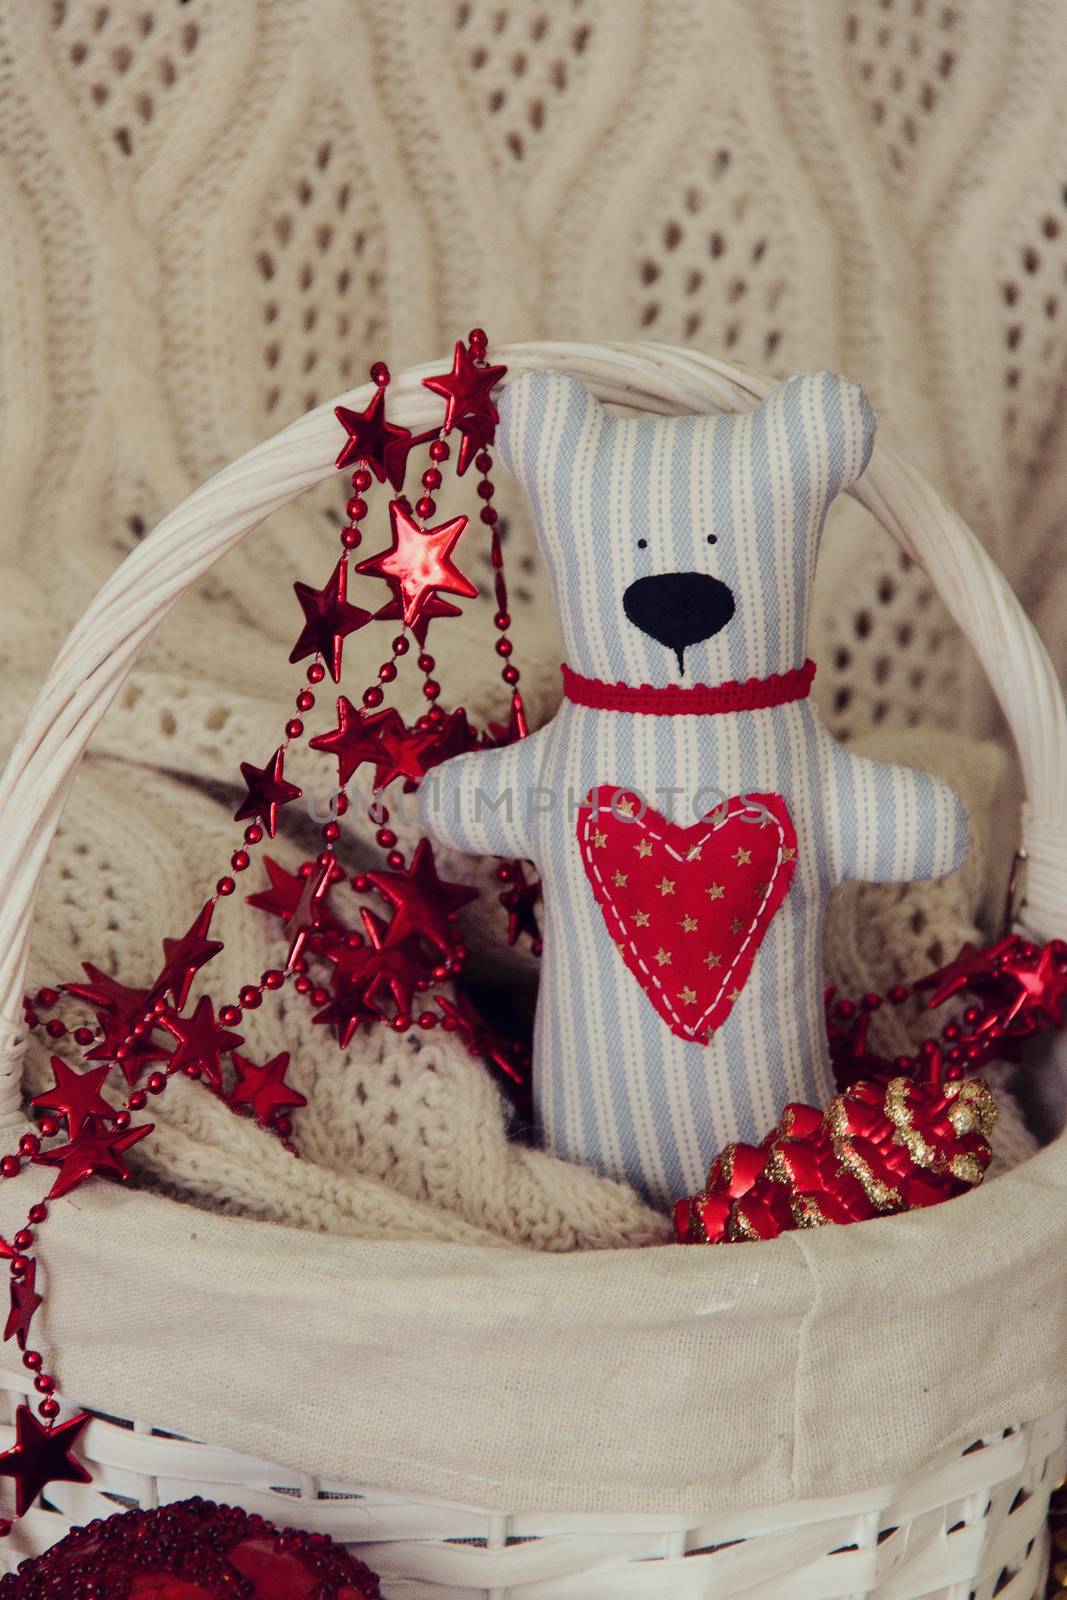 Handmade Teddy bear for Valentine day. photo by Irinavk